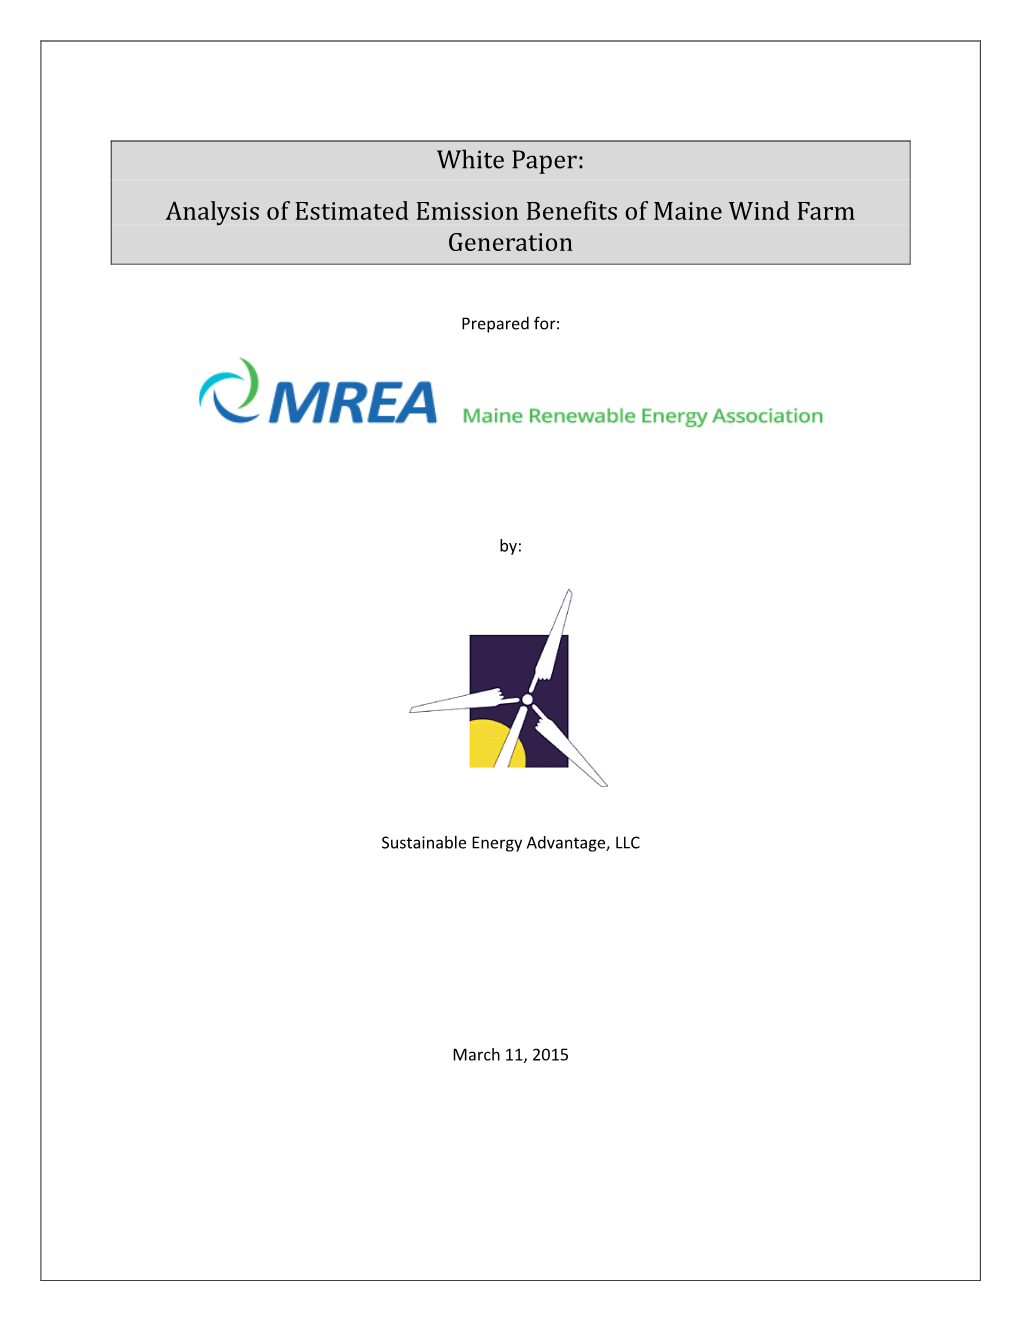 Analysis of Estimated Emission Benefits of Maine Wind Farm Generation